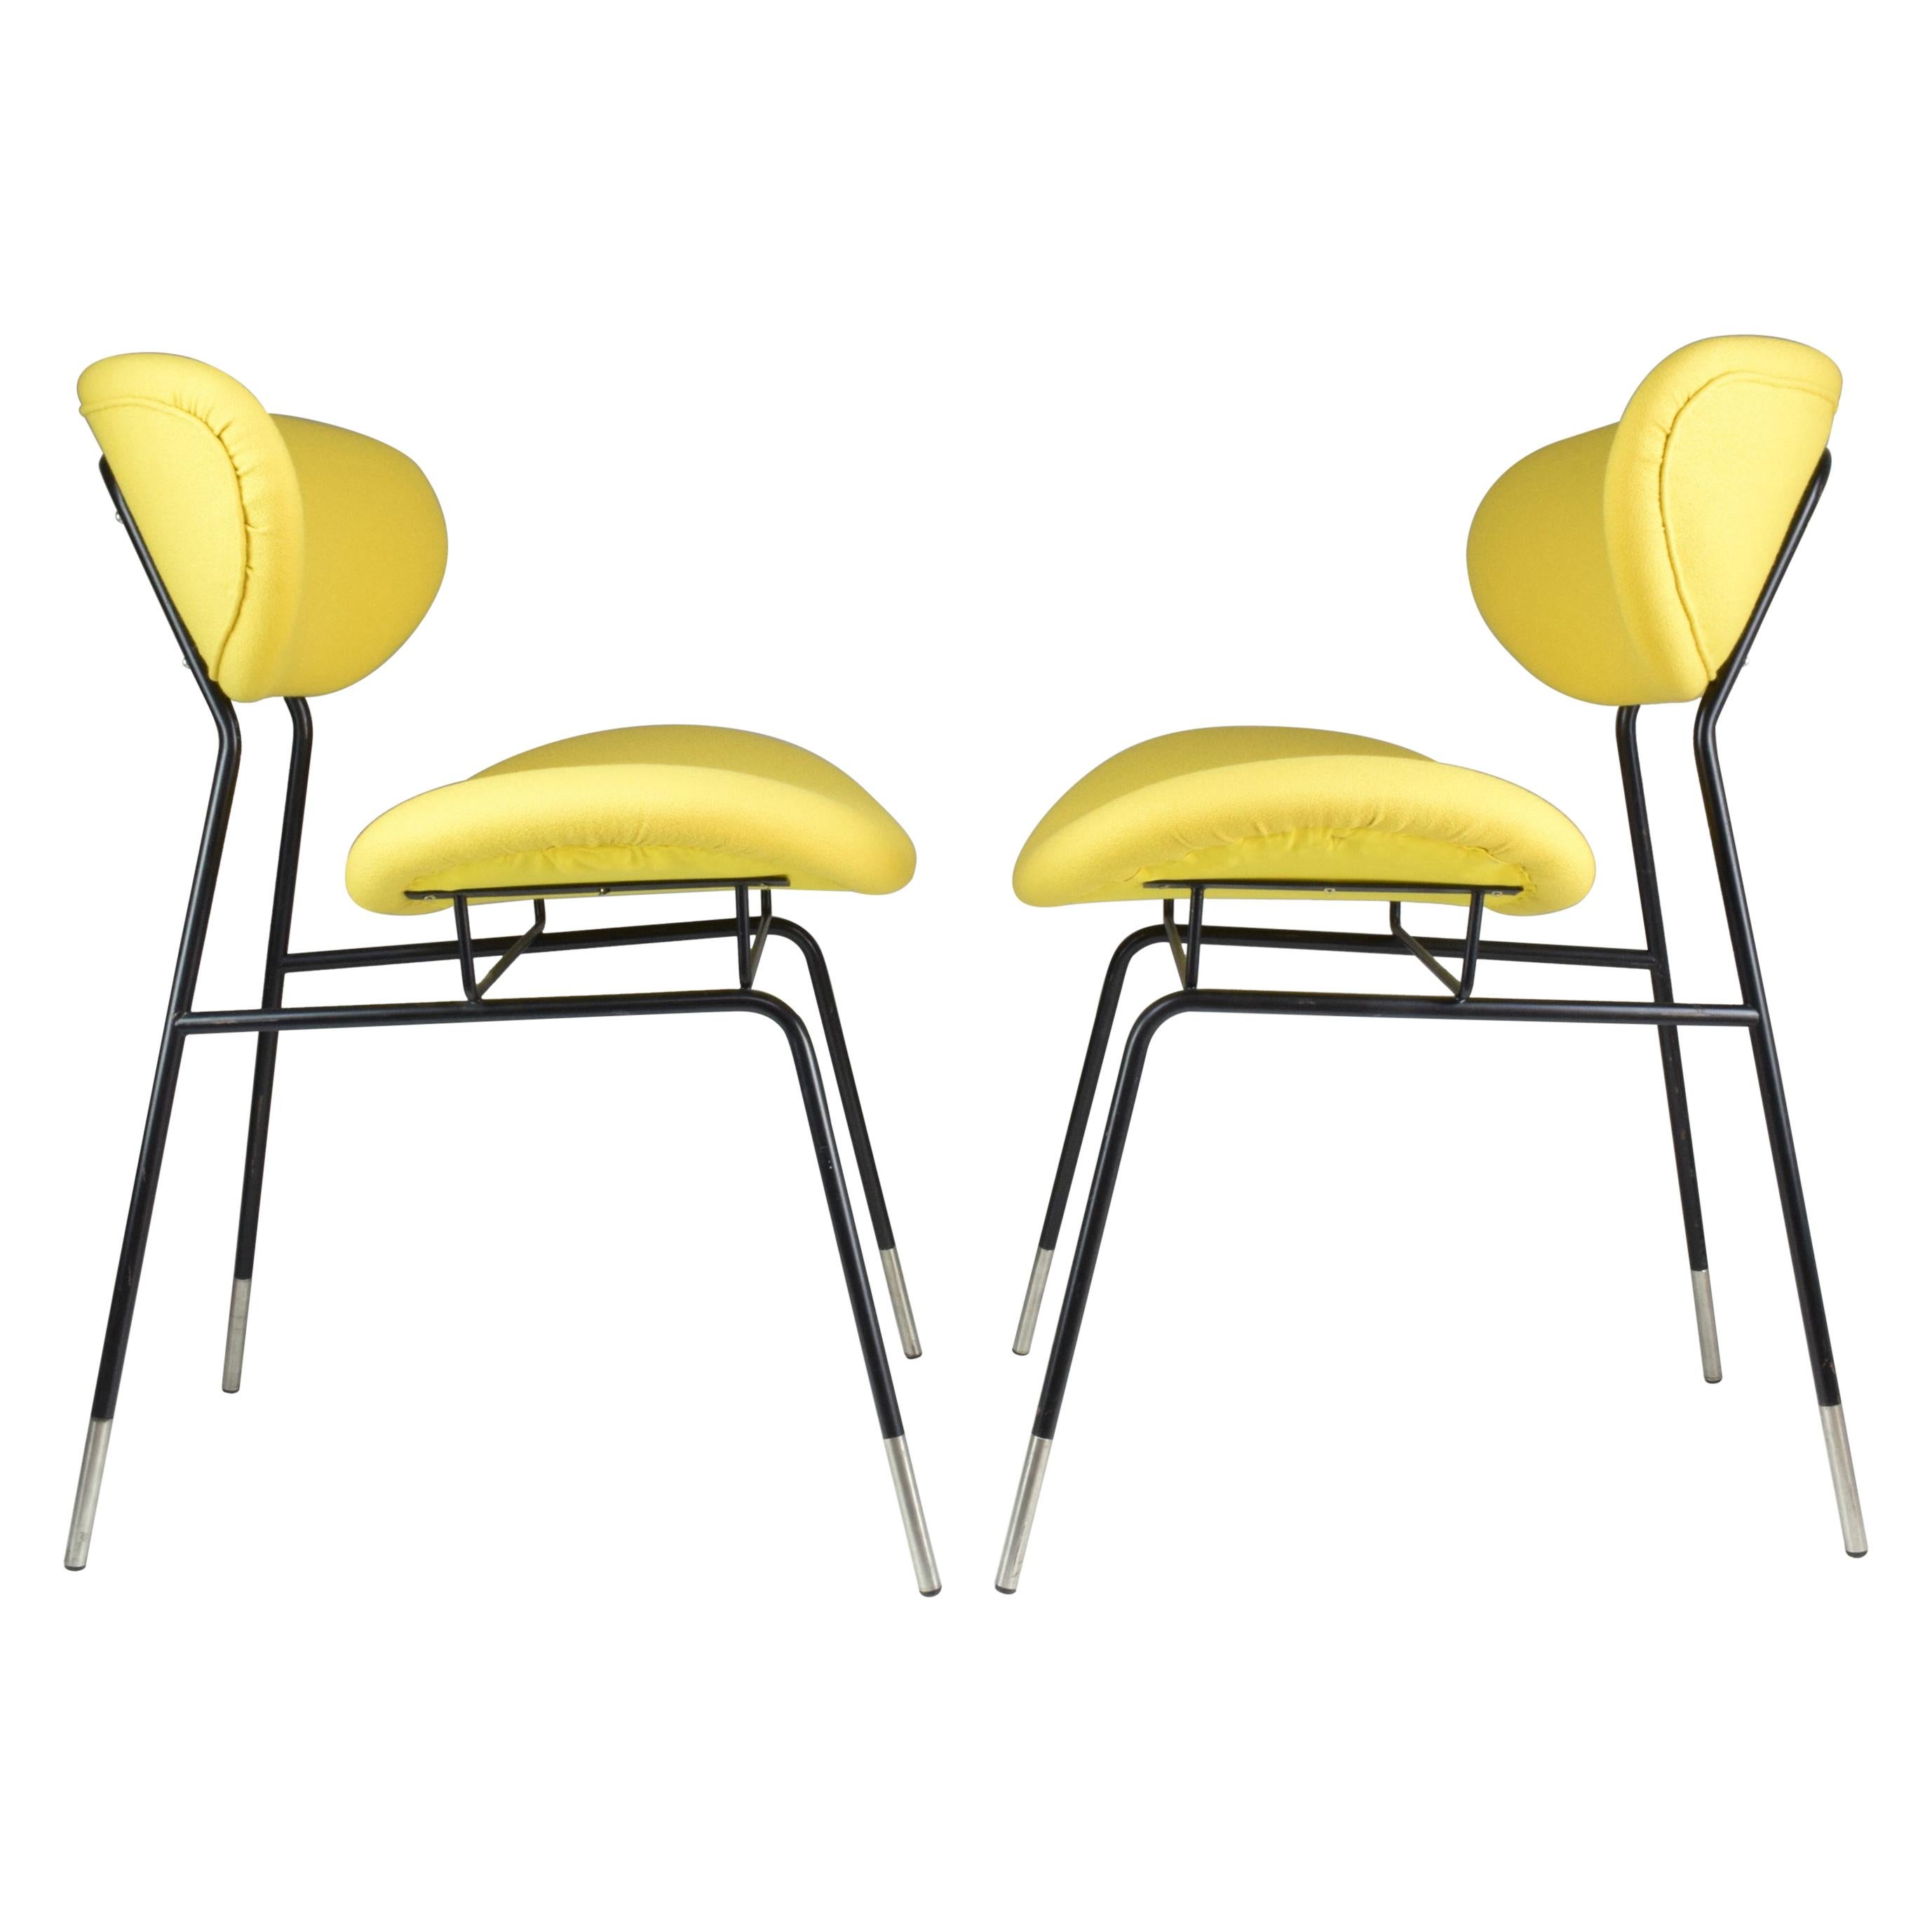 Italian Midcentury Gastone Rinaldi Chairs for RIMA, Set of Two, 1950s